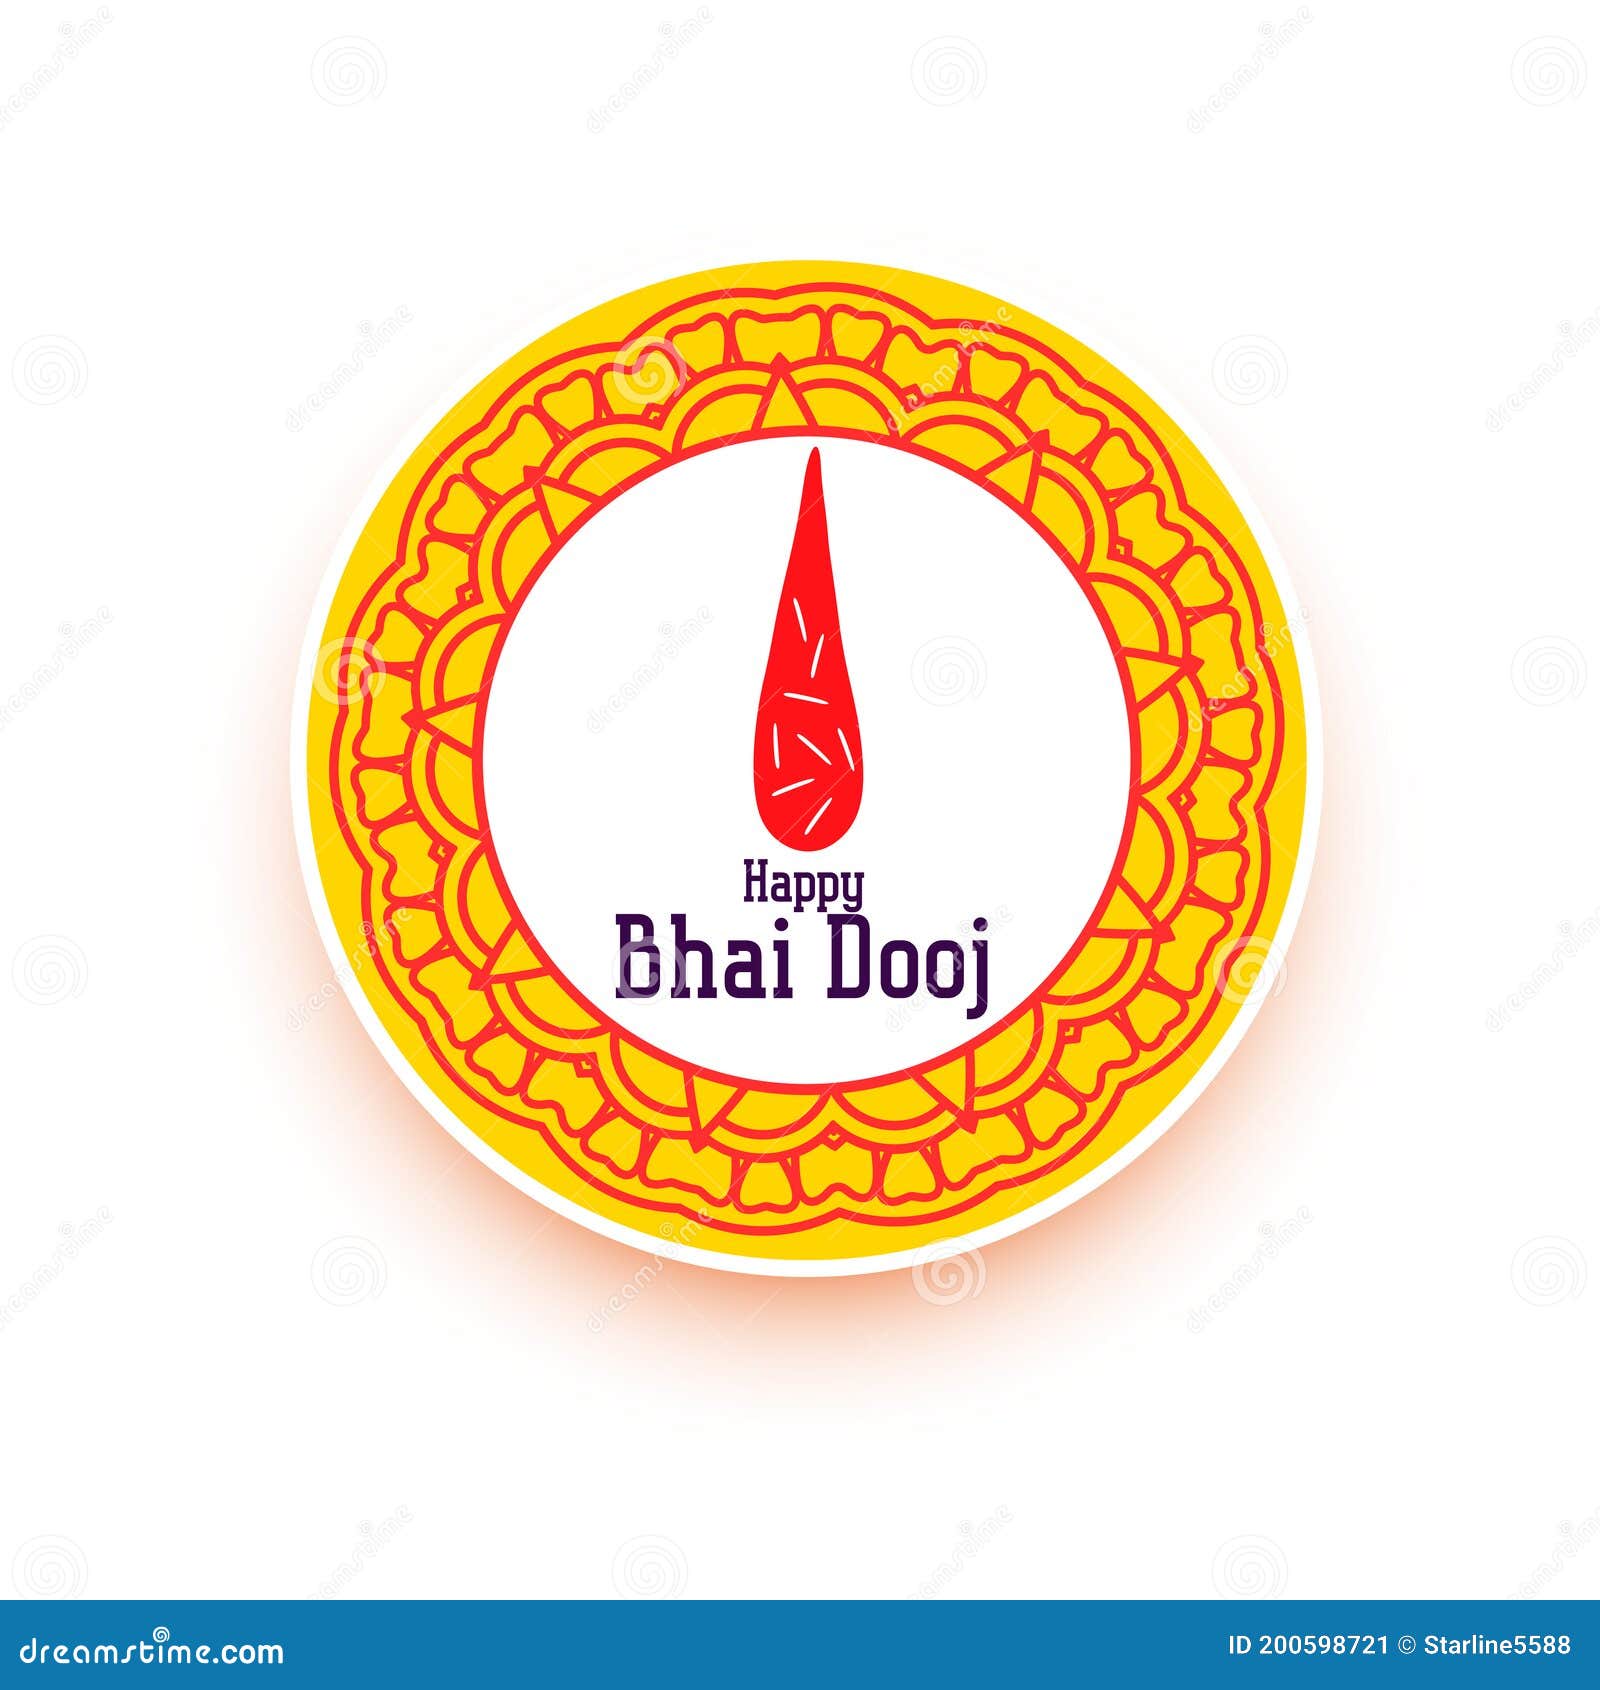 Happy Bhai Dooj Design for Indian Festival Stock Vector - Illustration ...